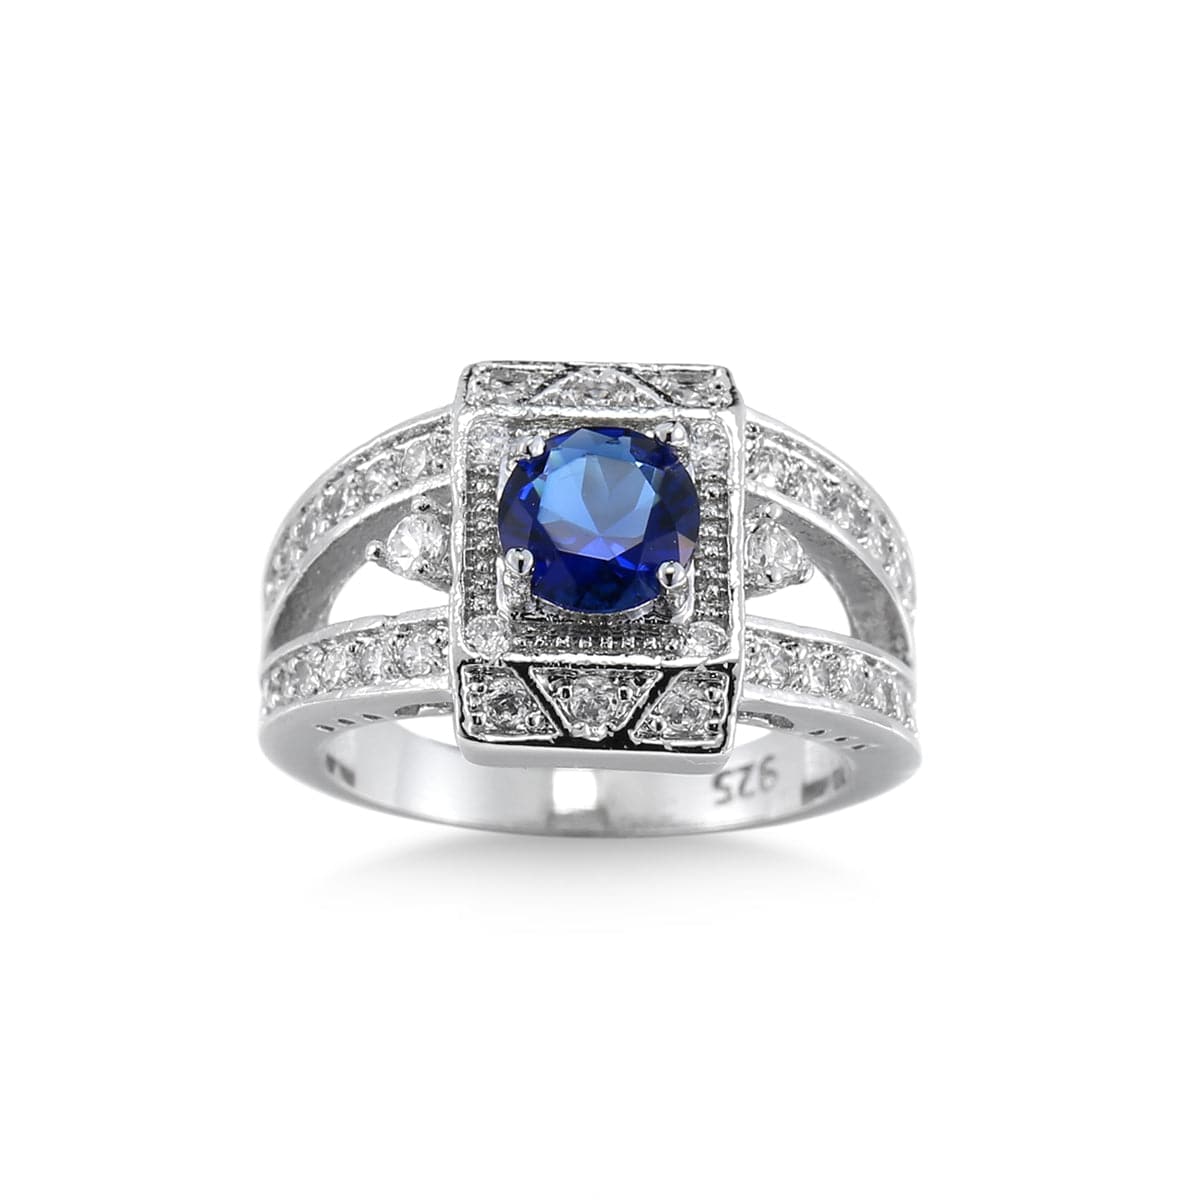 Navy Crystal & Cubic Zirconia Ring